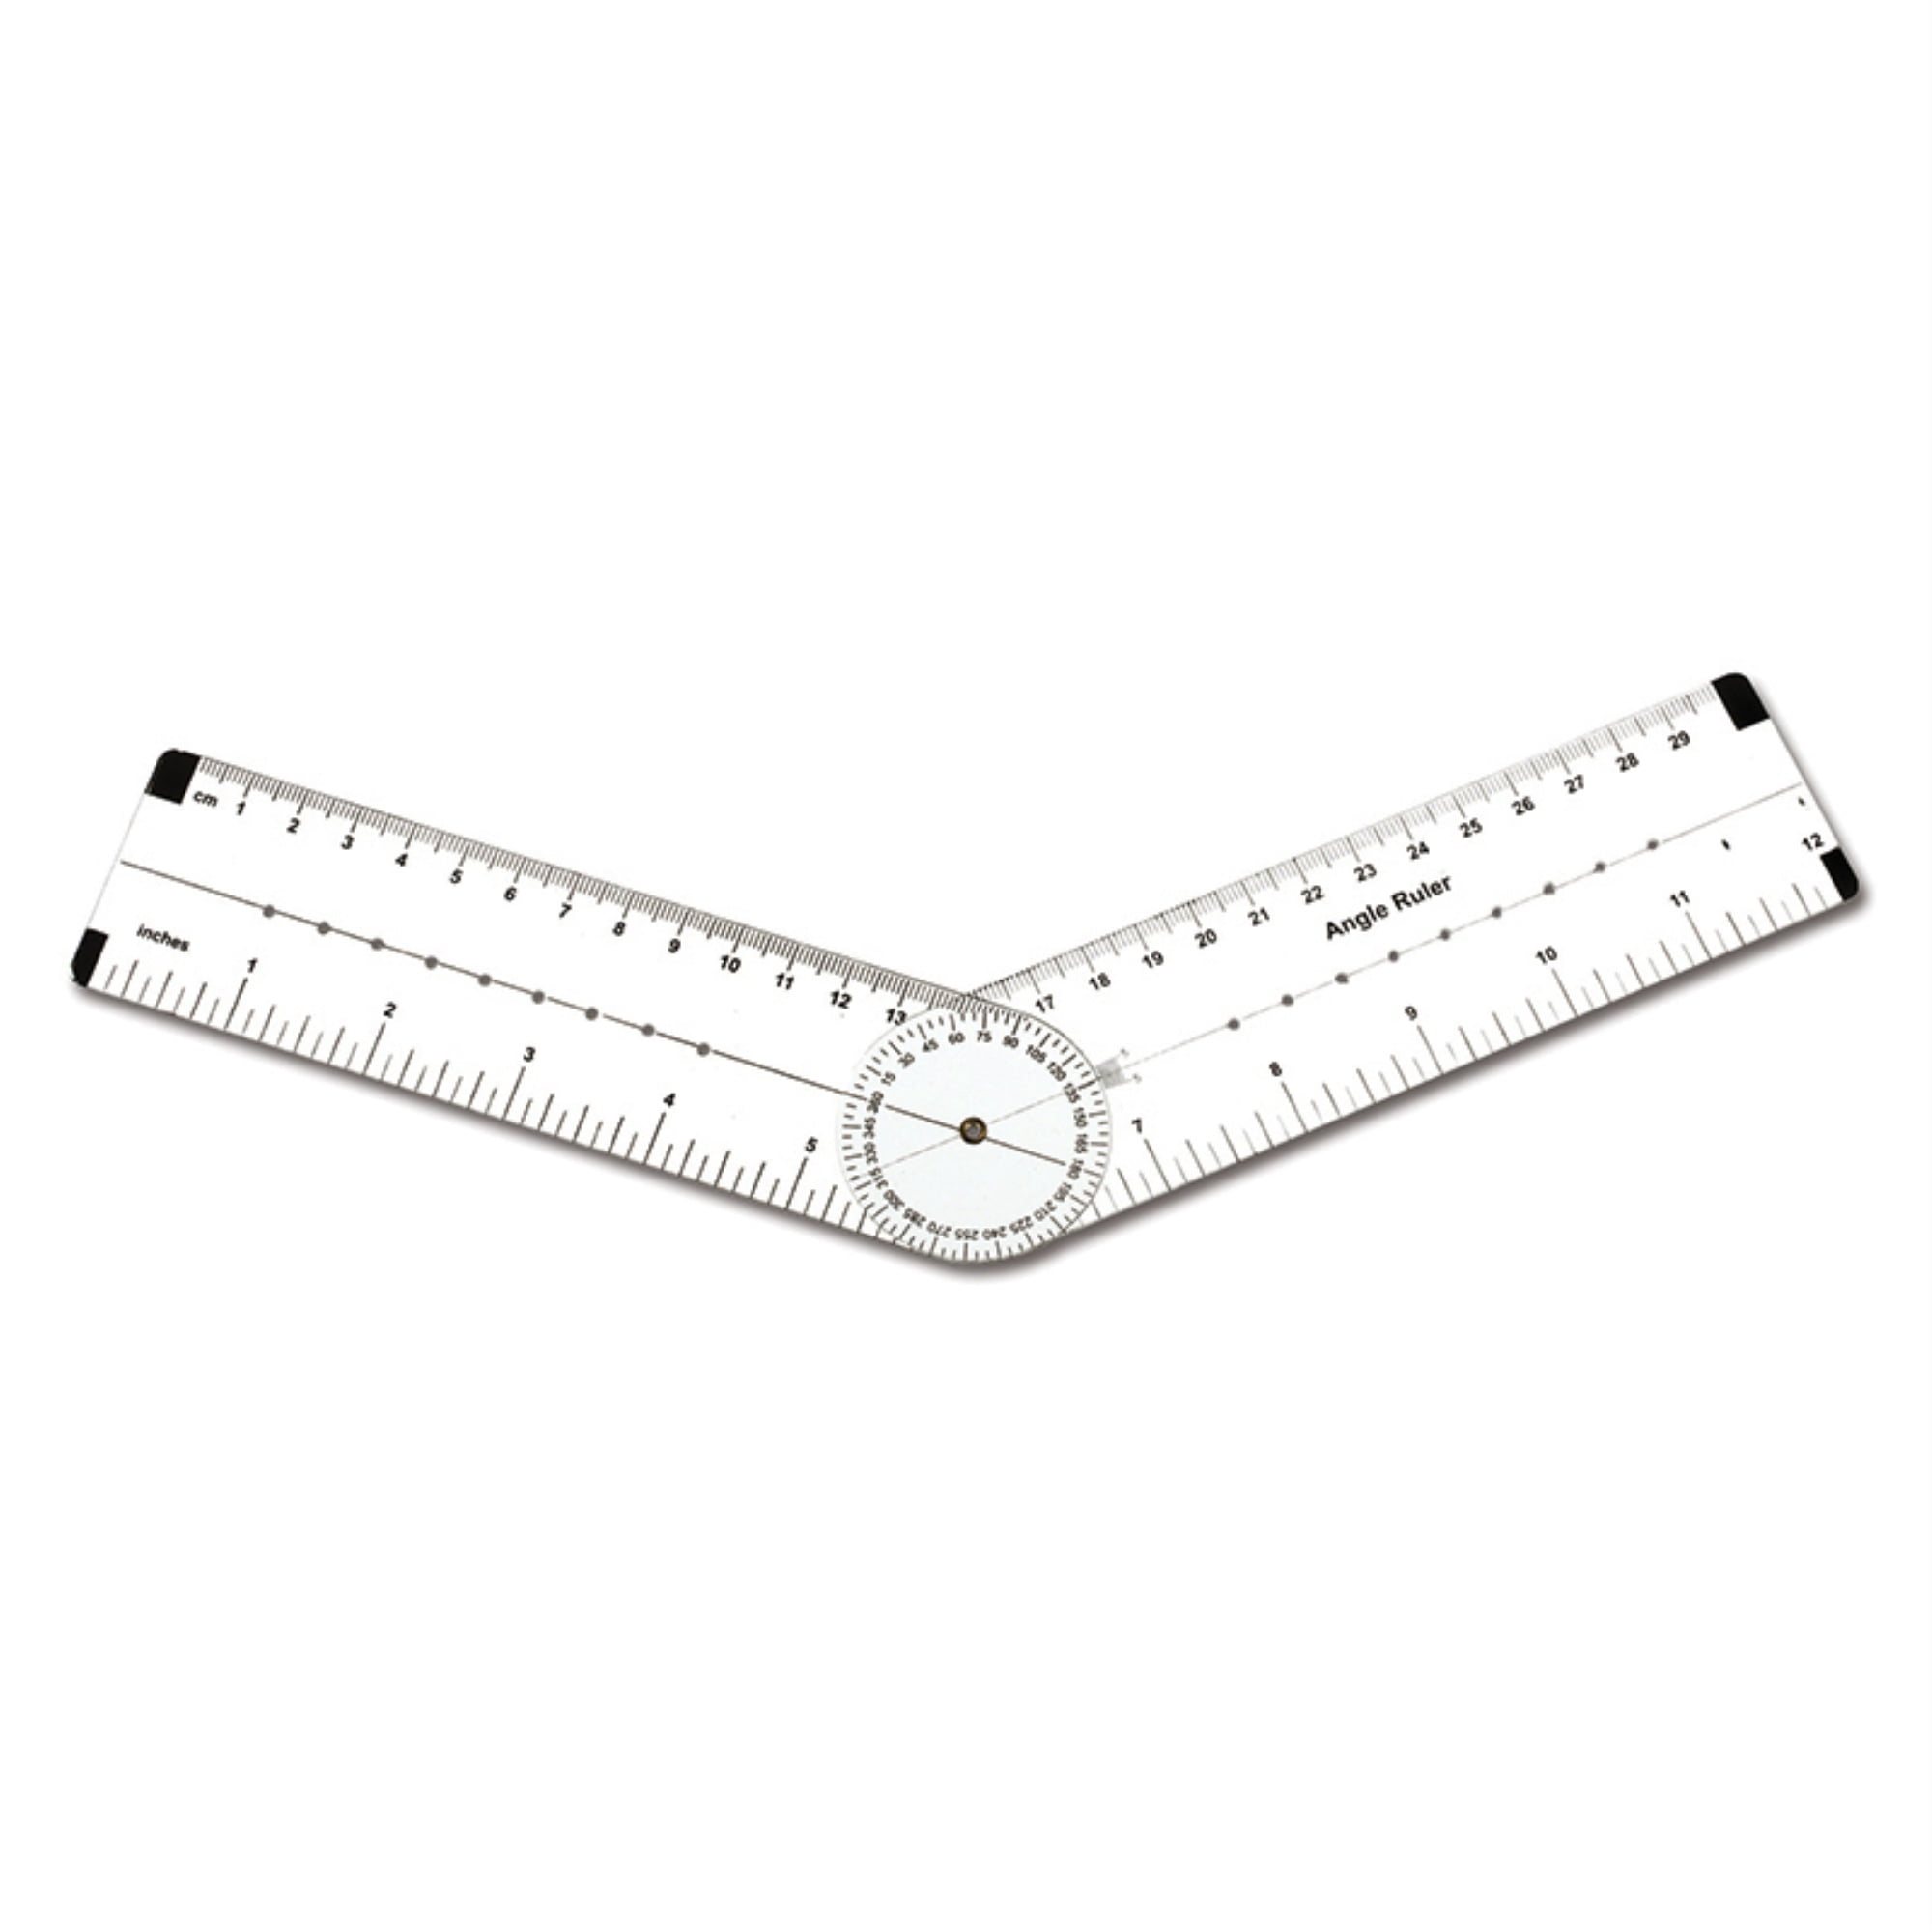 4 in 1 Metal Angle Measurement Scribing Template Ruler Model Building Tools Set for sale online 